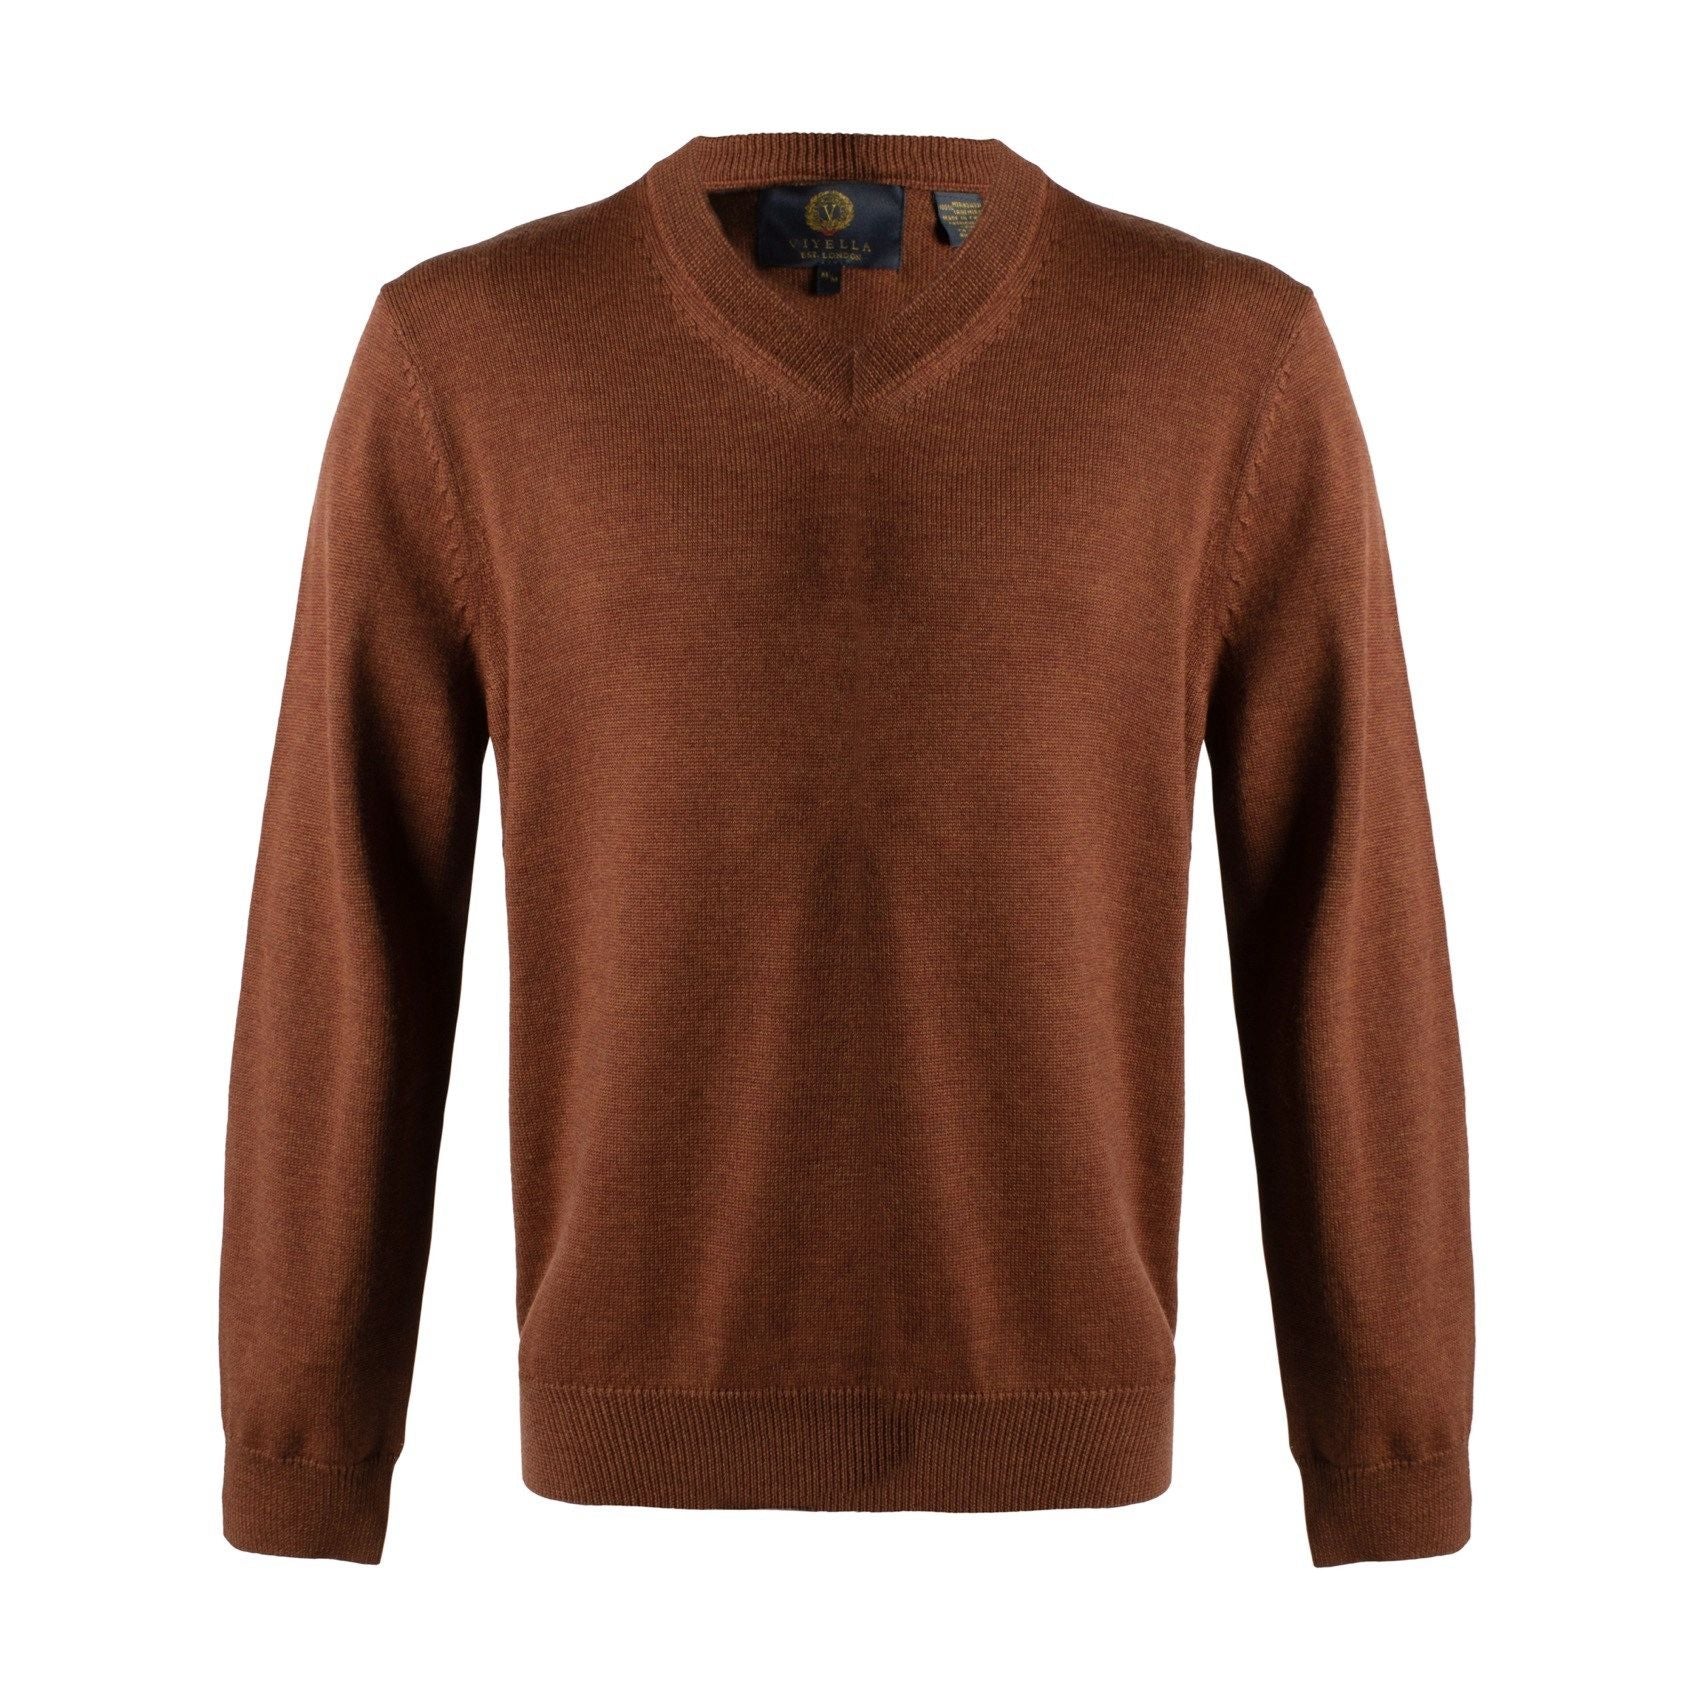 Extra Fine 'Zegna Baruffa' Merino Wool V-Neck Sweater in Brick by Viyella